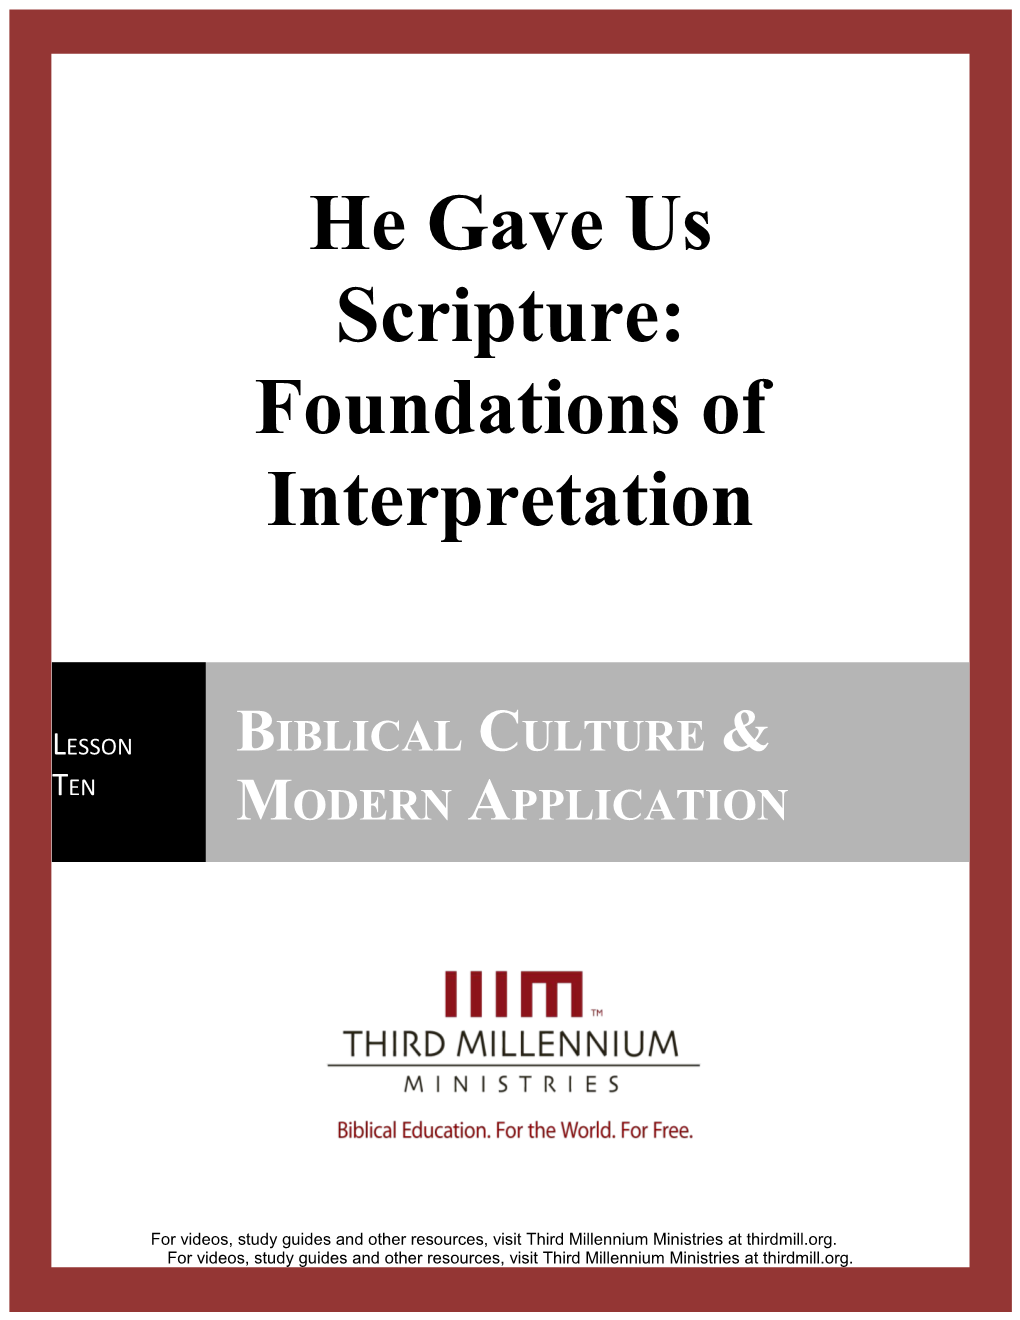 He Gave Us Scripture: Foundations of Interpretation